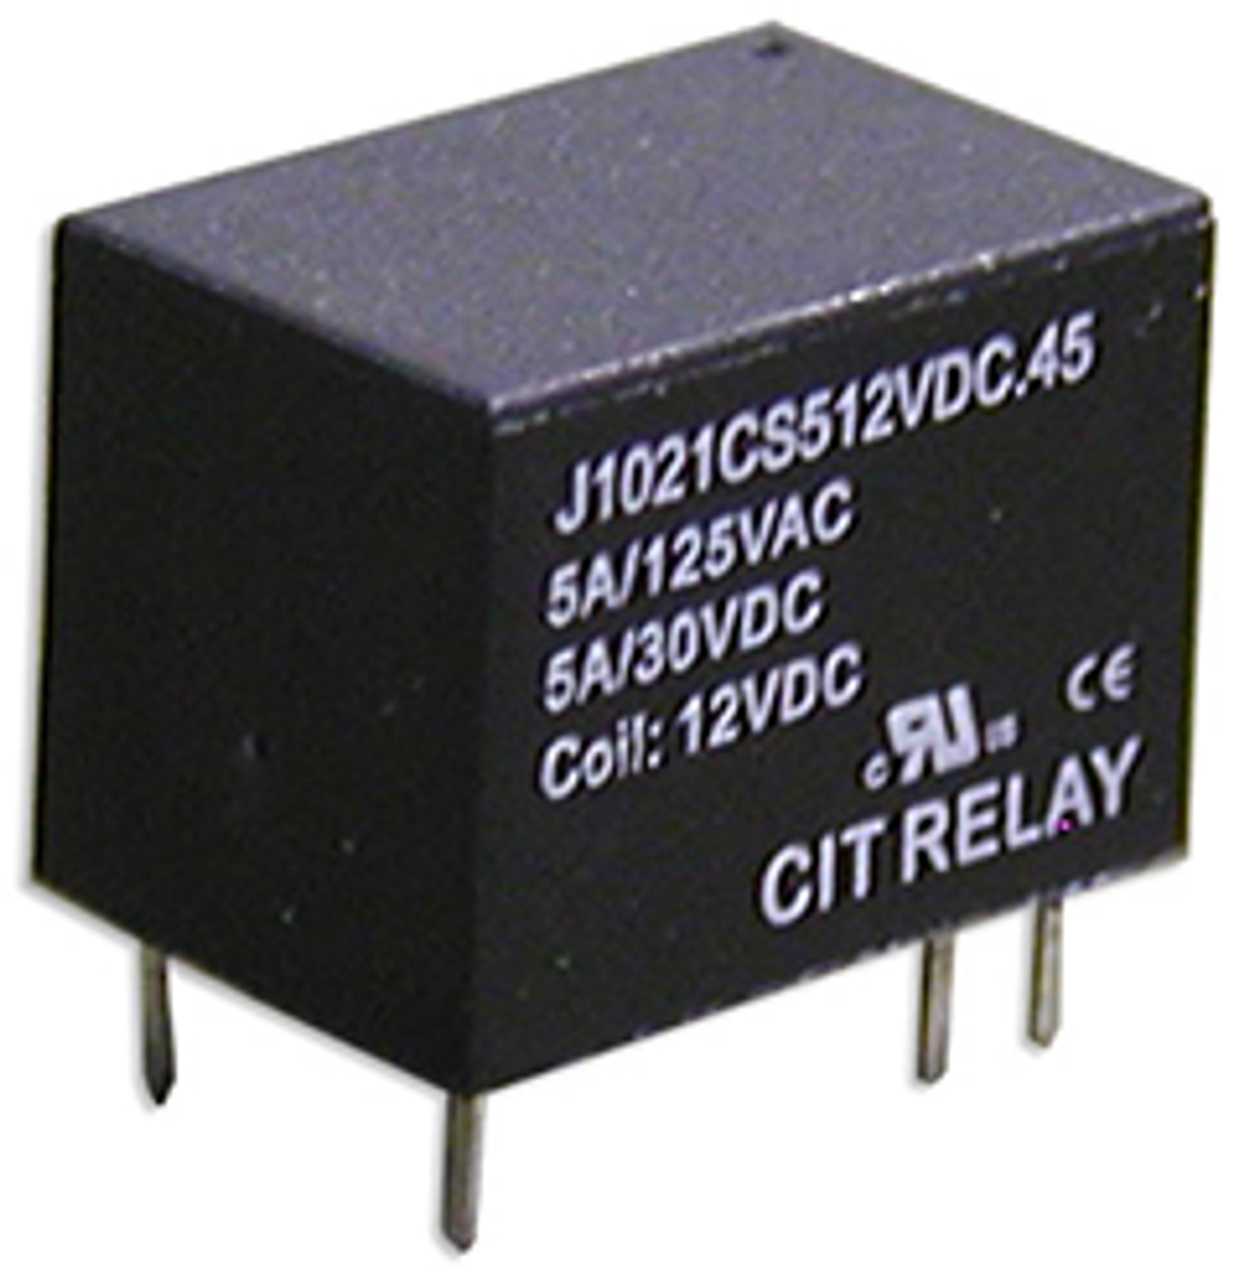 CIT Relay and Switch J1021CS112VDC.45 Signal Relays